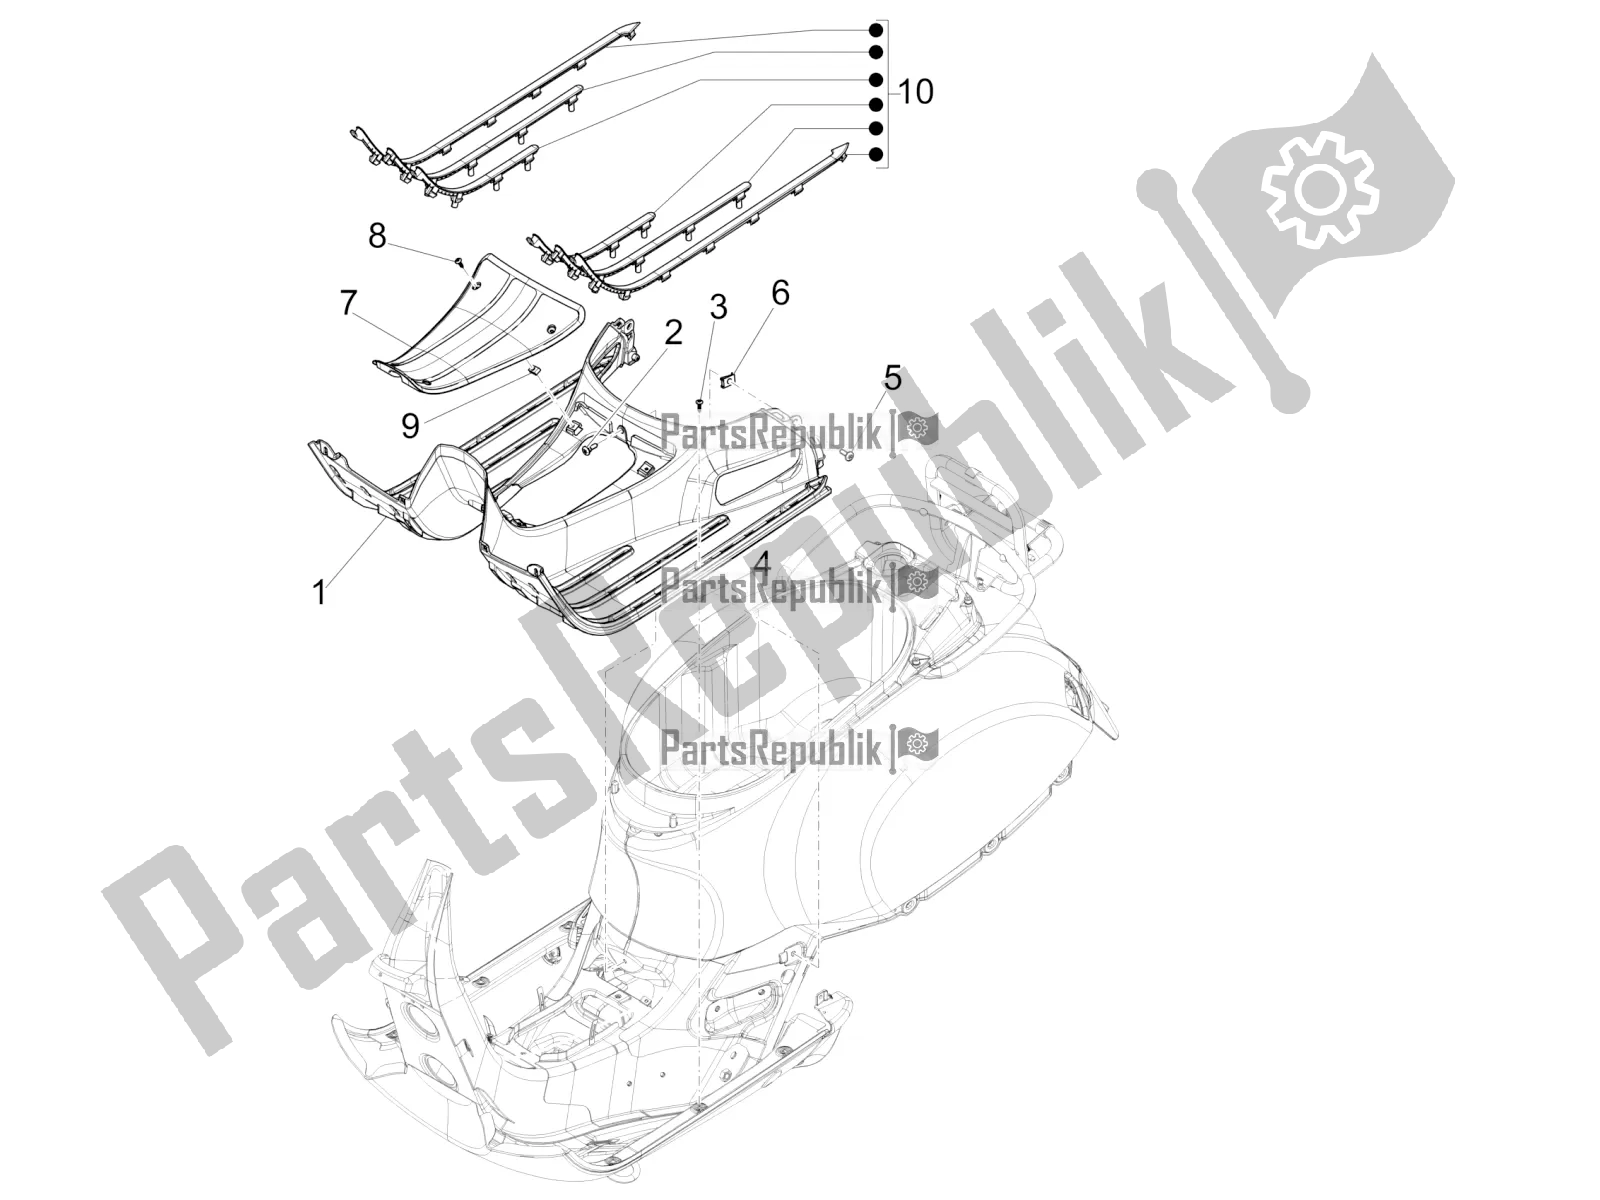 Todas las partes para Cubierta Central - Reposapiés de Vespa GTS 125 Super ABS Iget Apac 2020